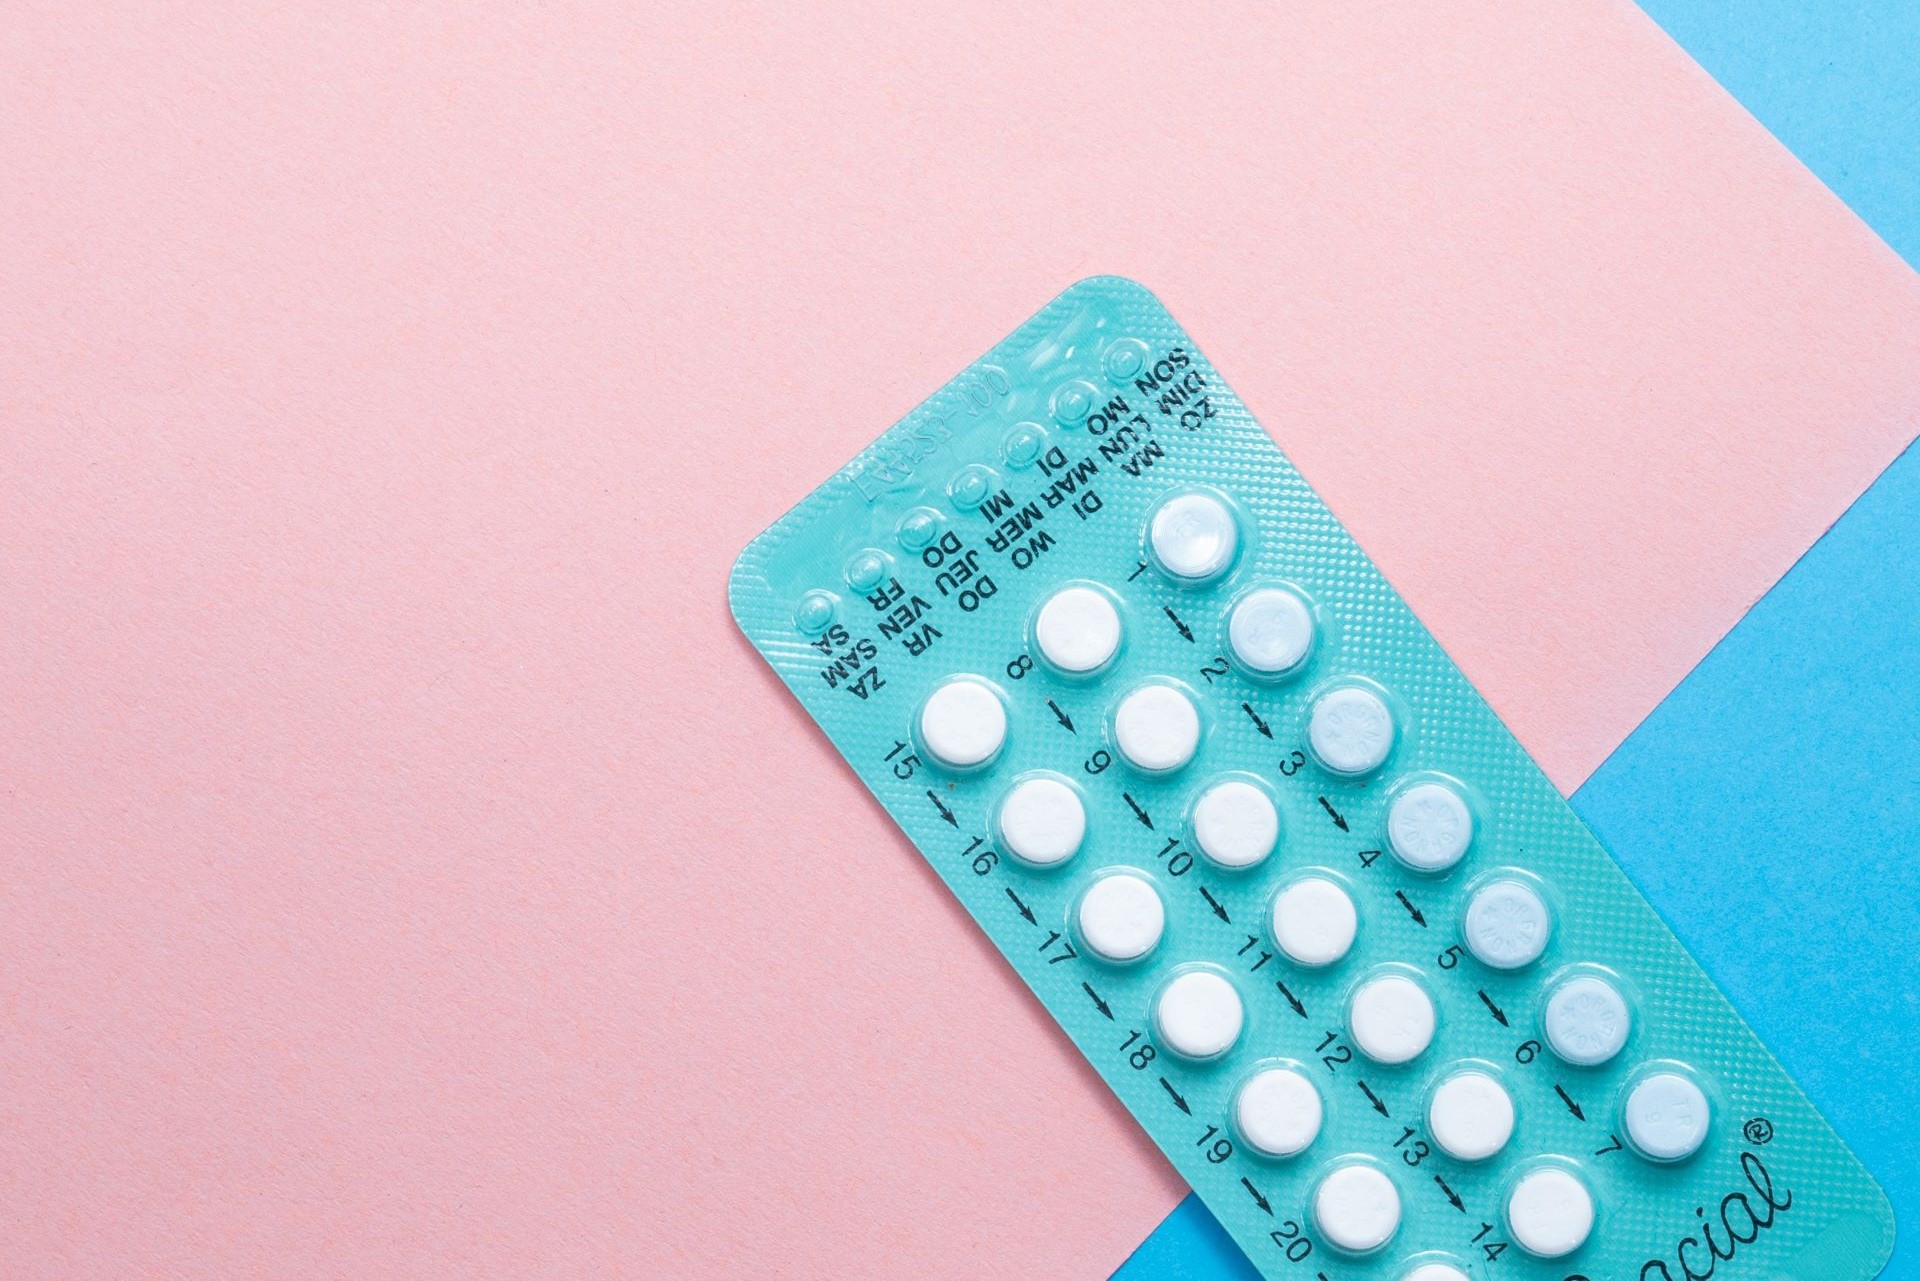 Birth control pill pack.